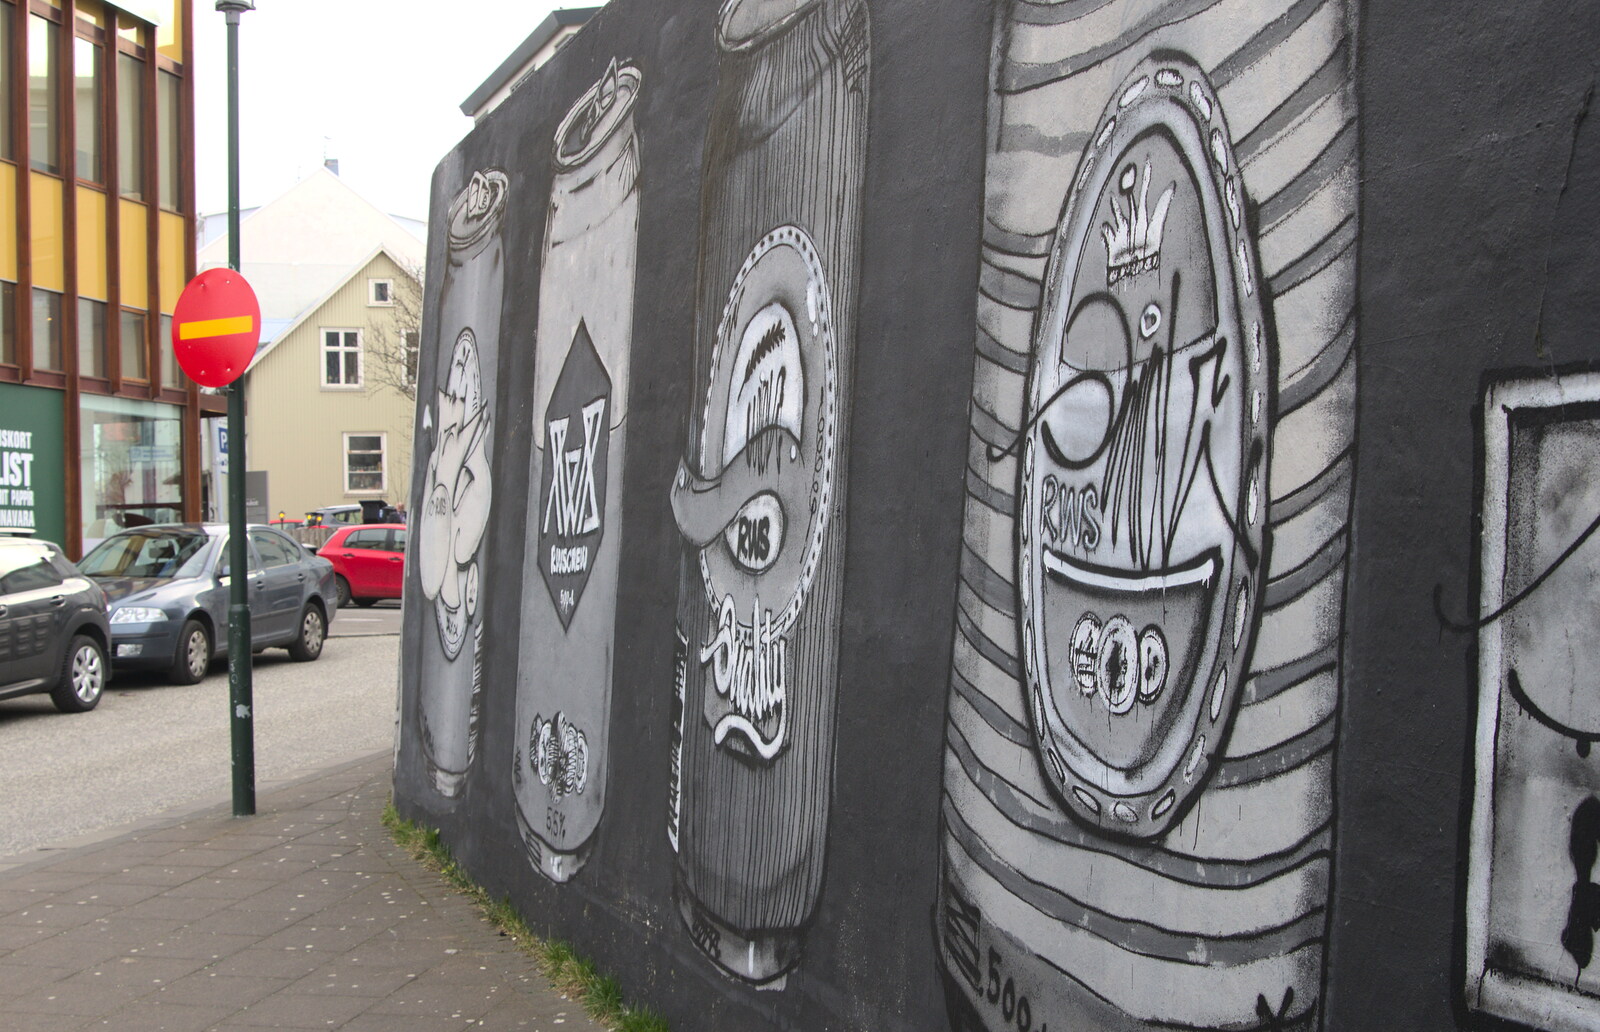 More street art from Stríðsminjar War Relics, Perlan and Street Art, Reykjavik, Iceland - 23rd April 2017